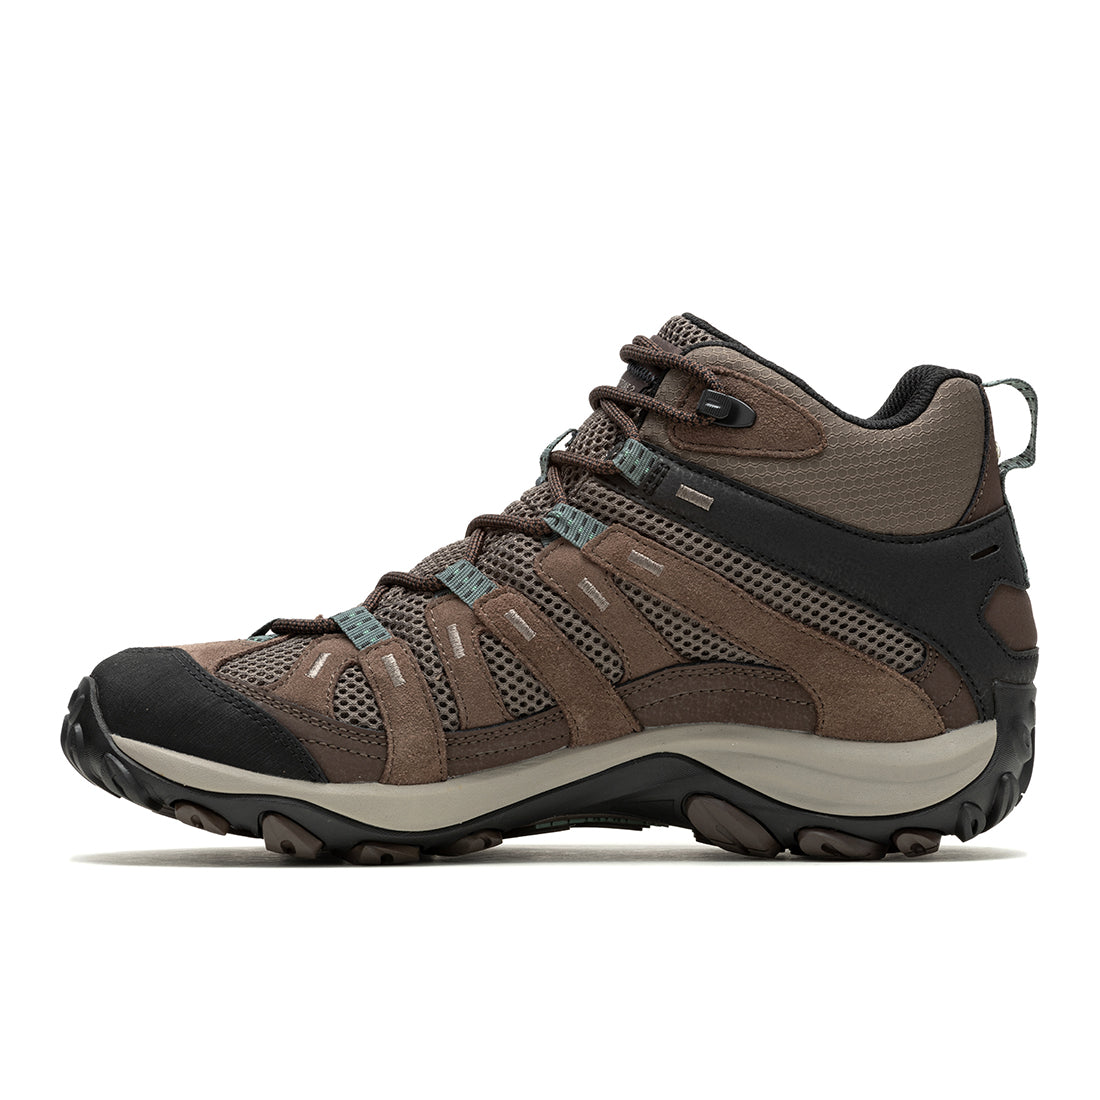 Alverstone 2 Mid Wprf -Falcon/Bracken Mens Hiking Shoes - 0